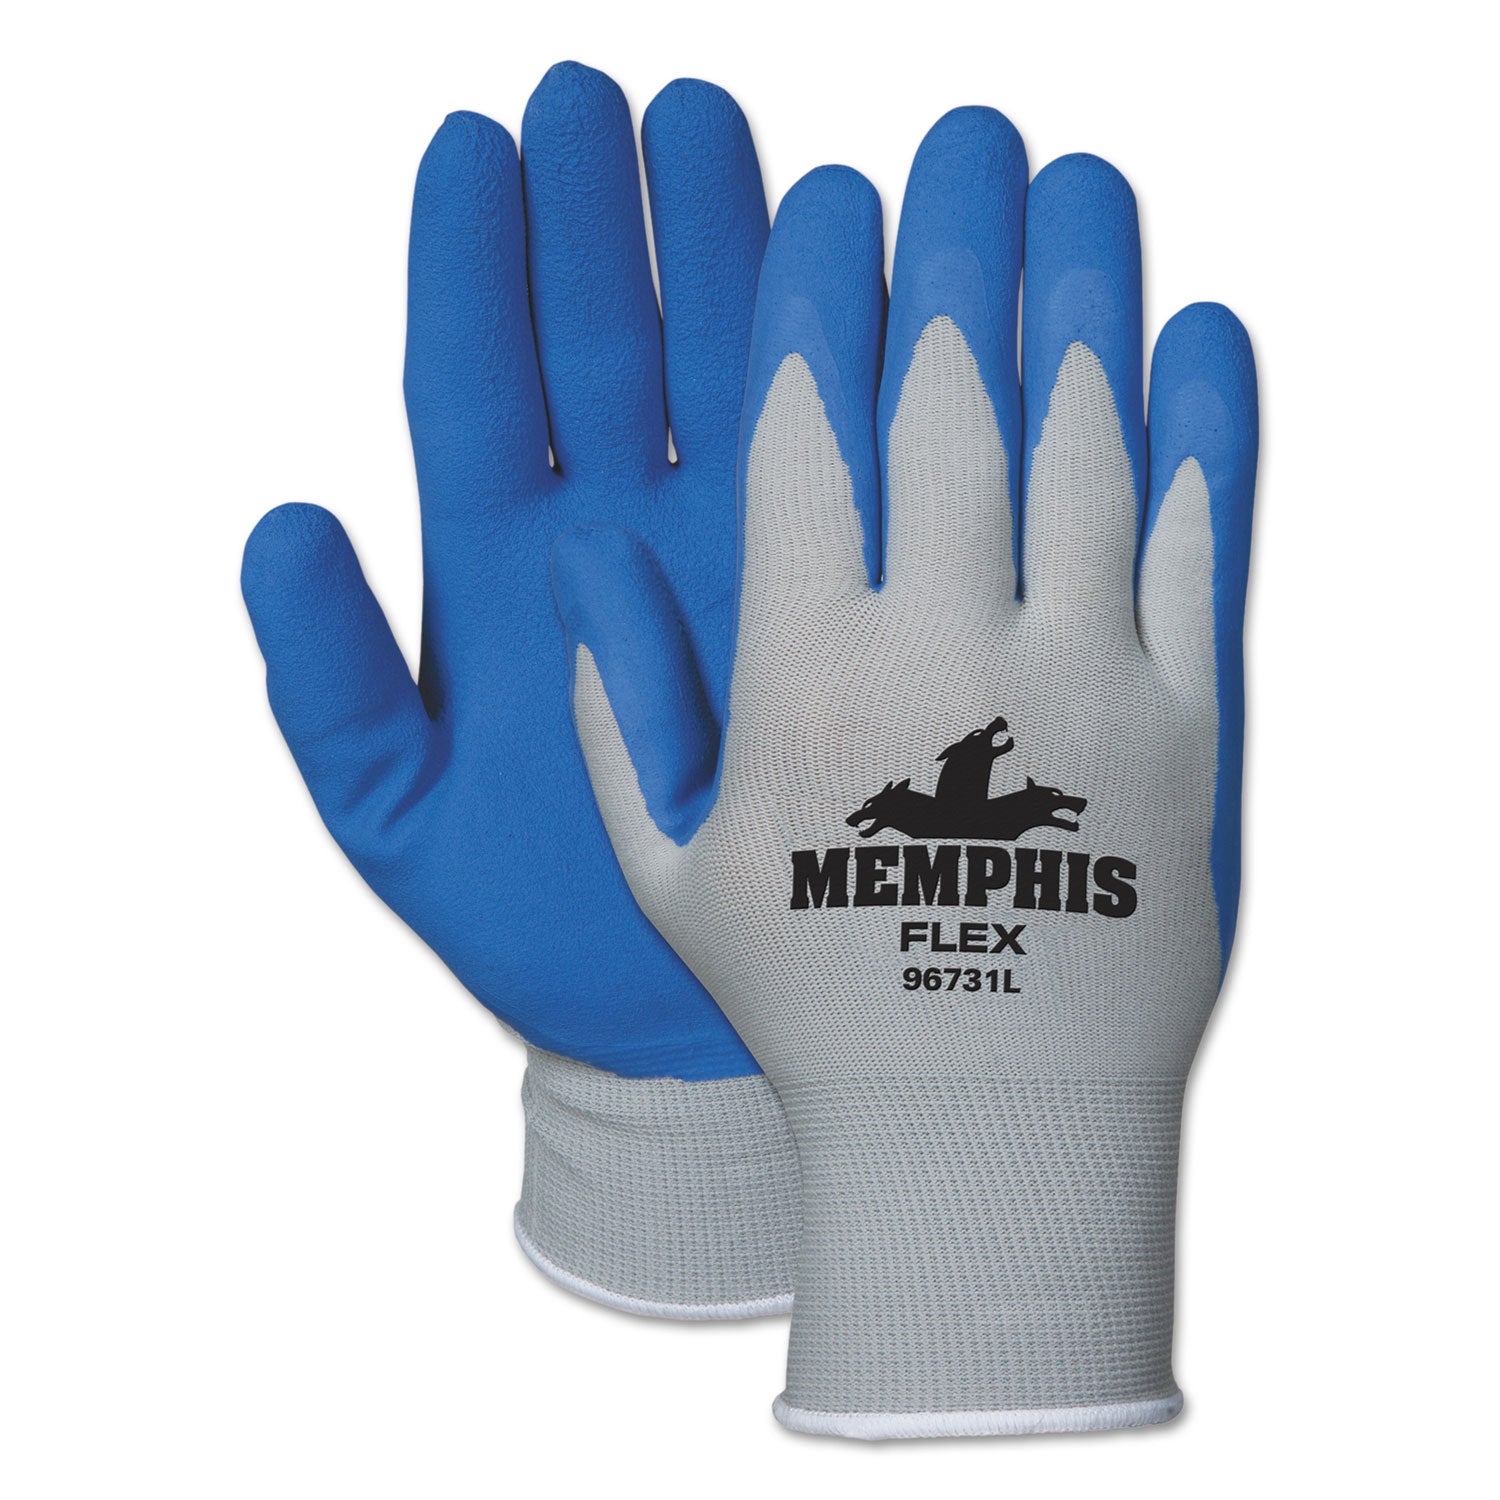 memphis-flex-seamless-nylon-knit-gloves-large-blue-gray-dozen_crw96731ldz - 1